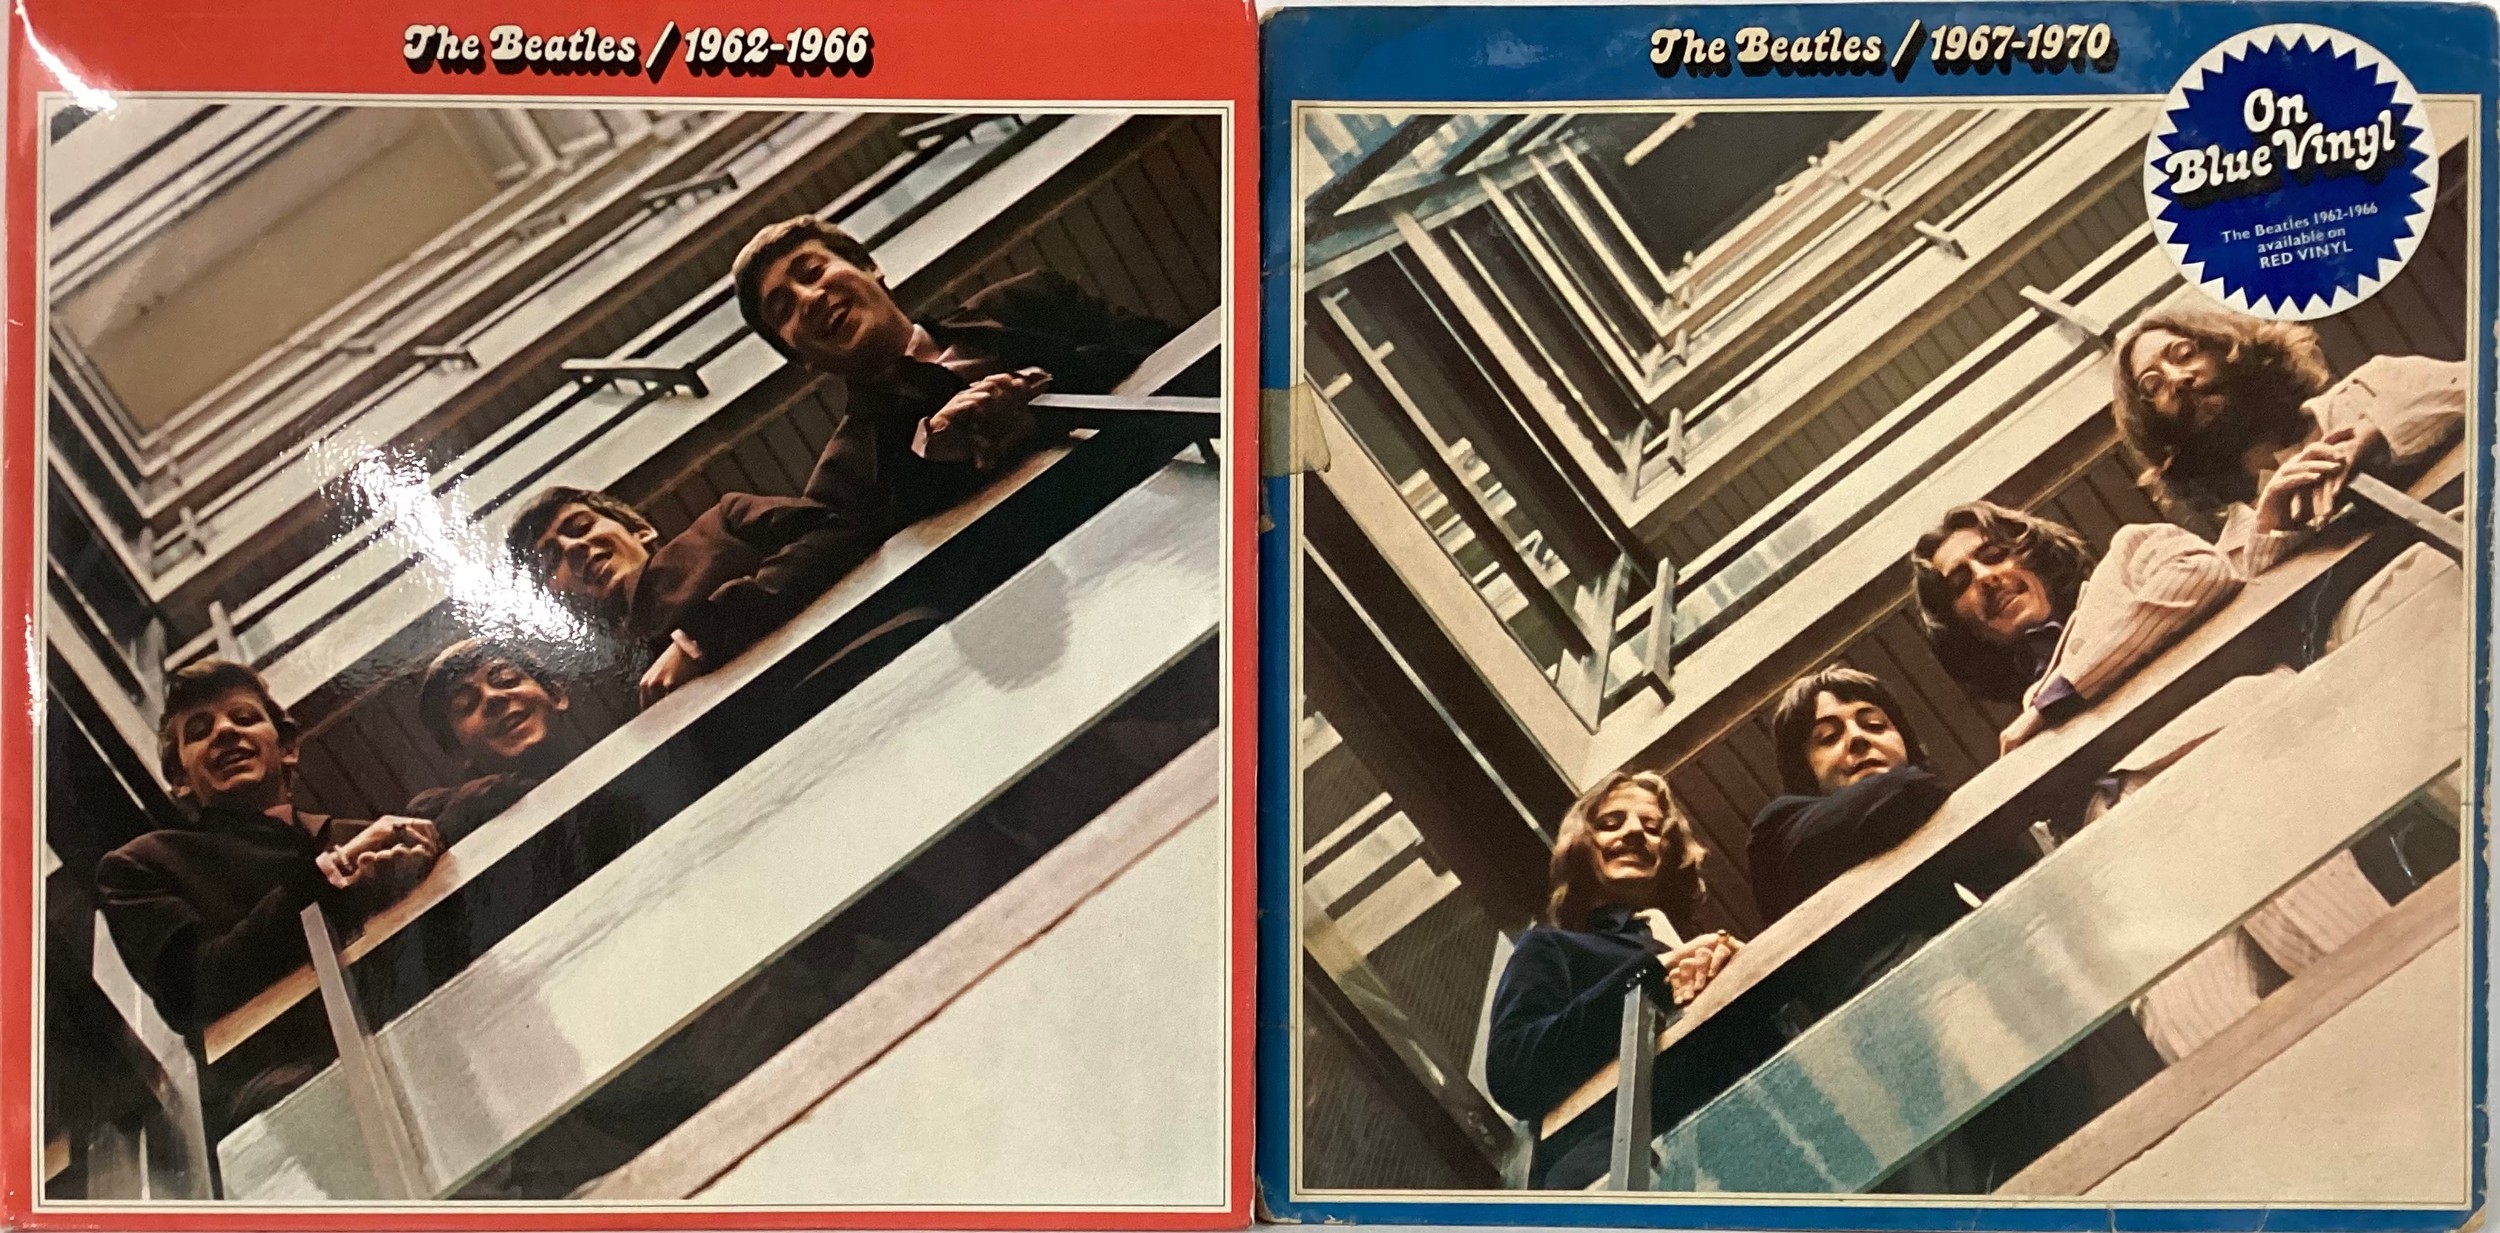 THE BEATLES VINYL ALBUMS X 2. Here we have a copy of ‘1962/1966’ on black vinyl in gatefold sleeve